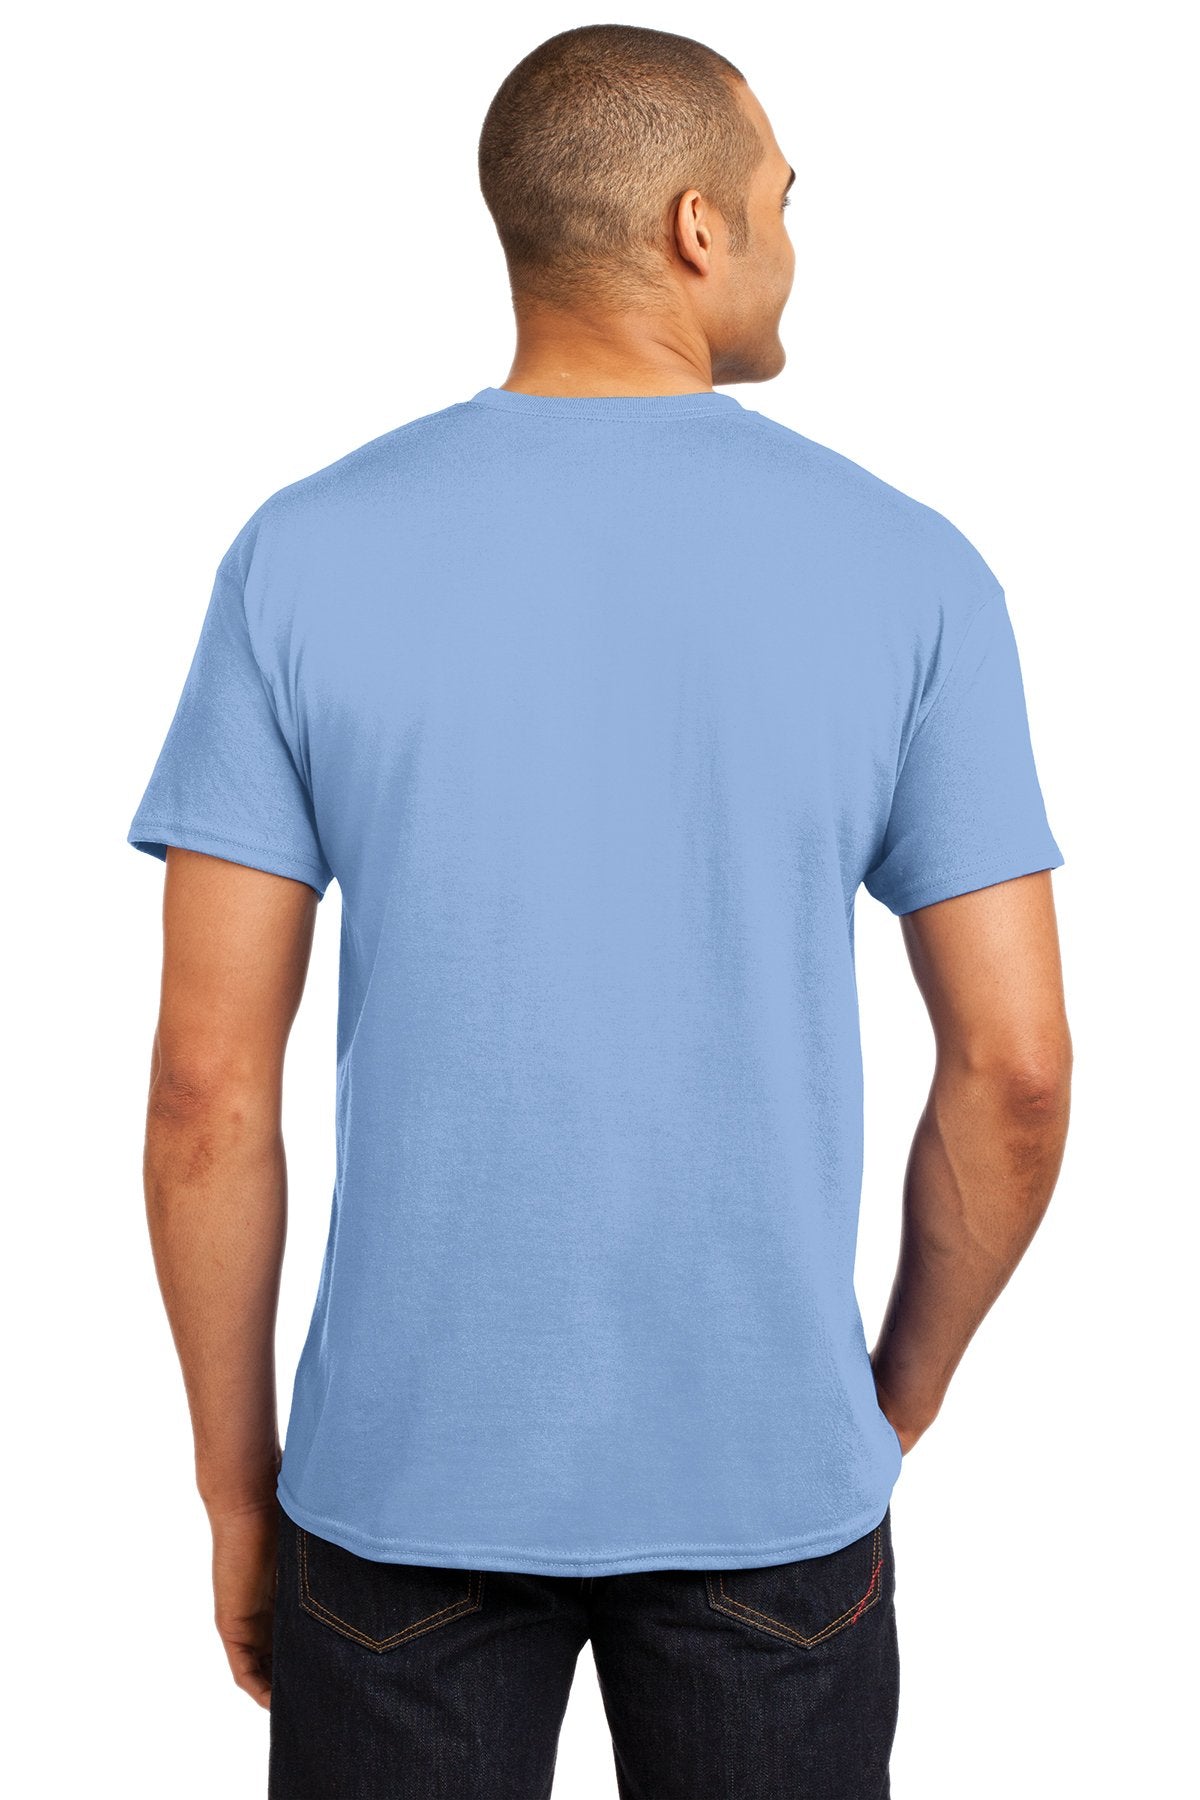 hanes ecosmart 50 50 cotton/poly t shirt 5170 light blue